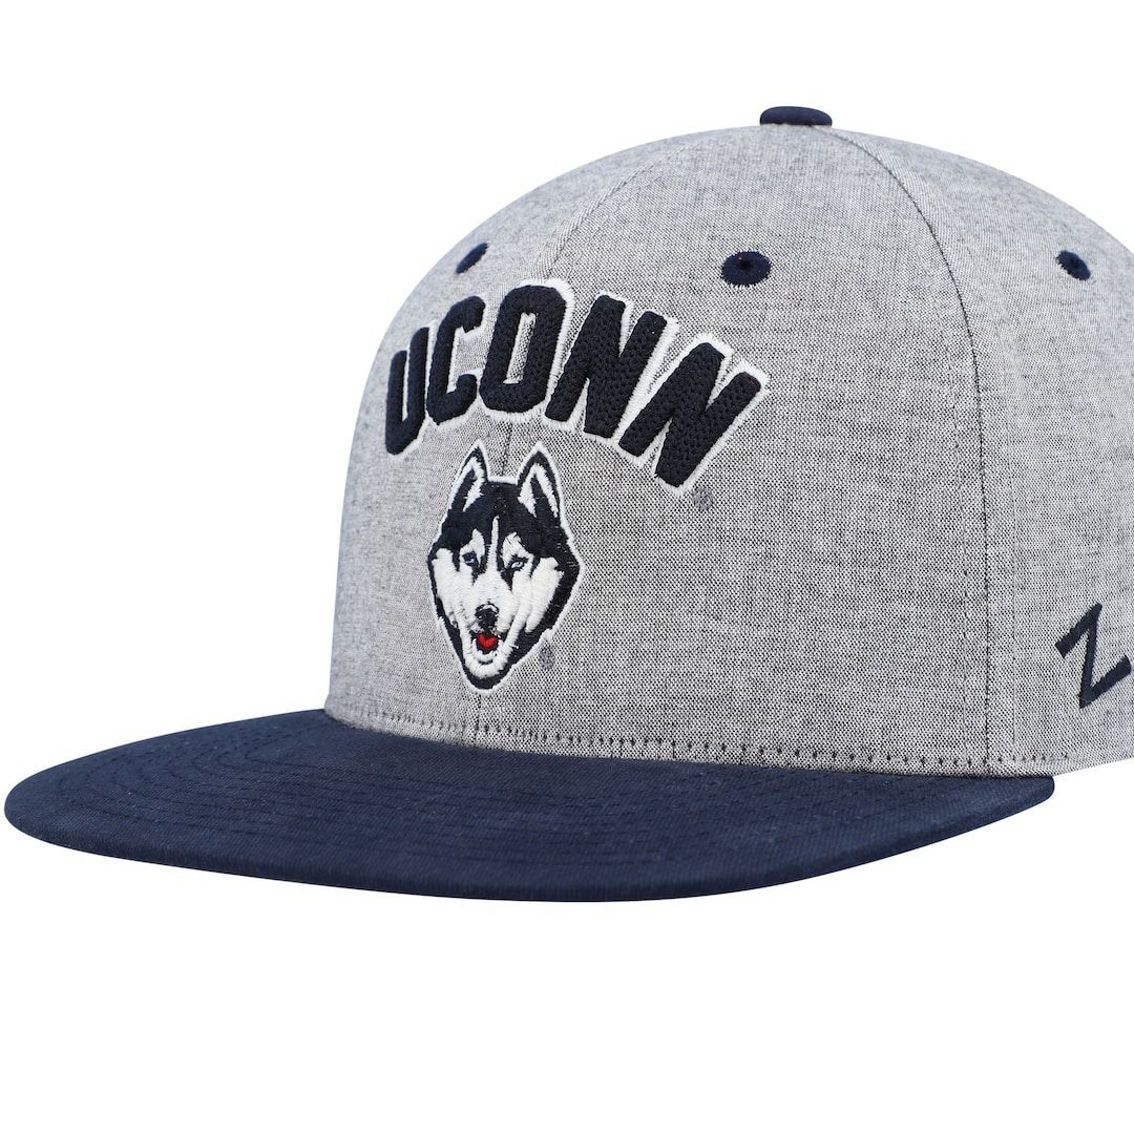 Zephyr Men's Gray/Navy UConn Huskies High Cut Snapback Hat